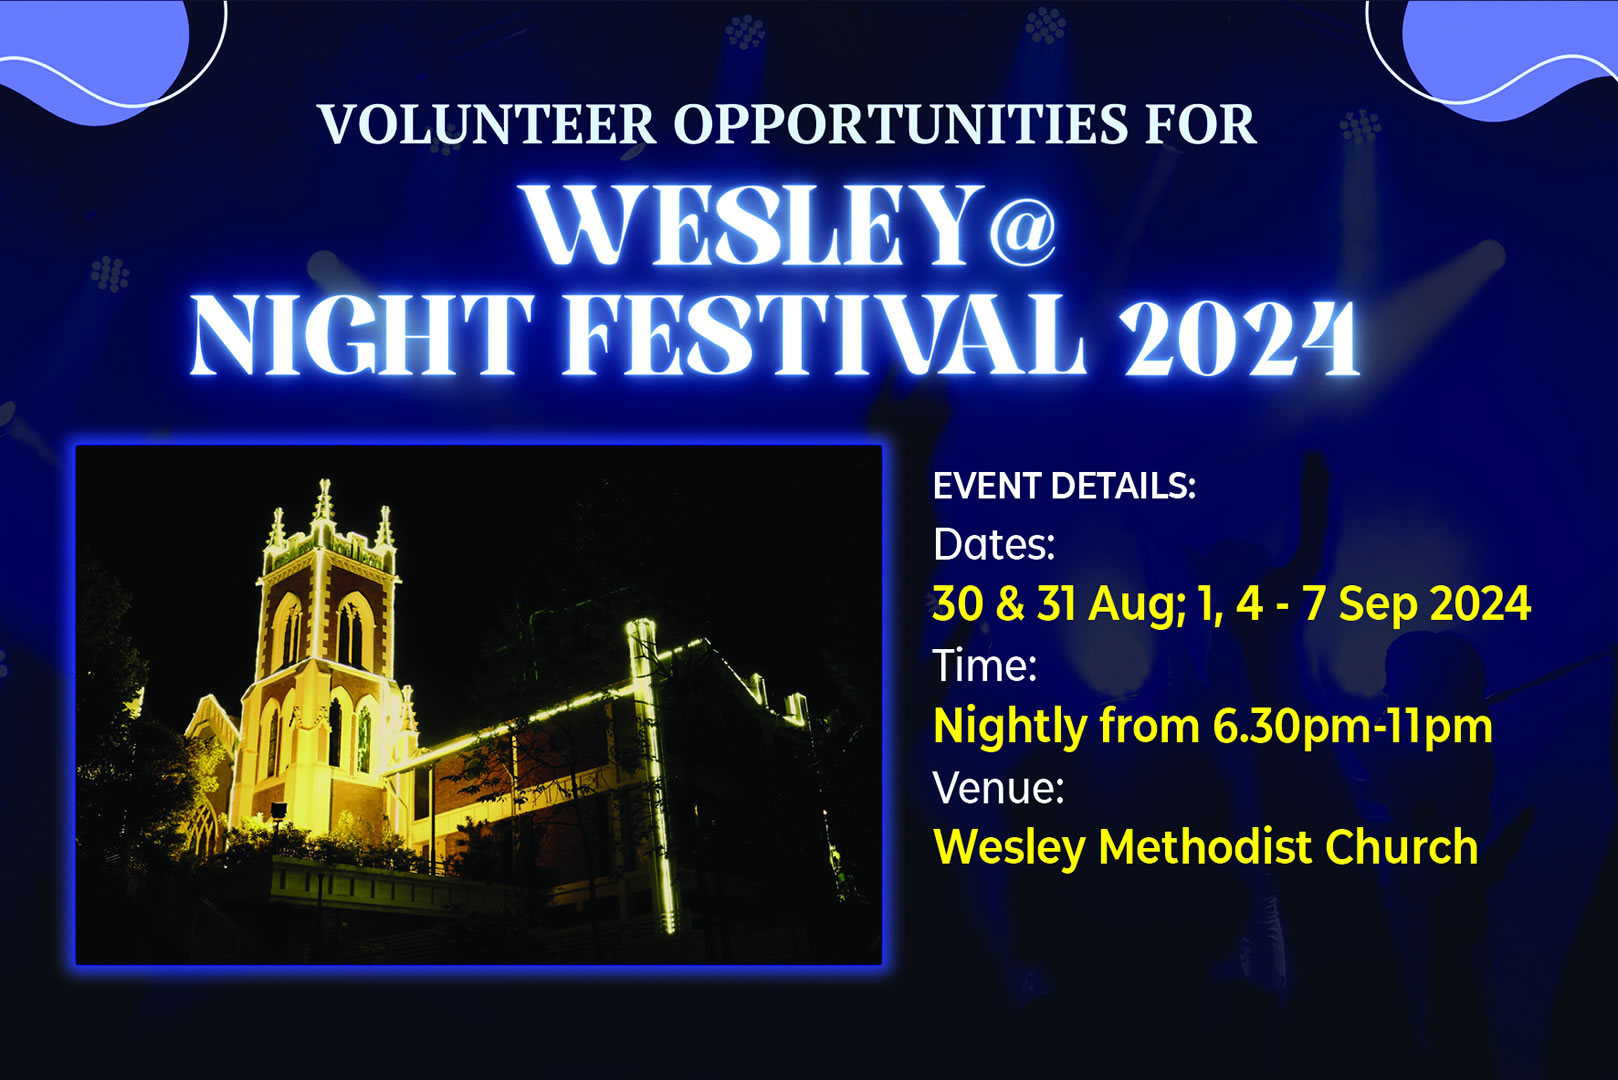 Wesley @ Night Festival 2024